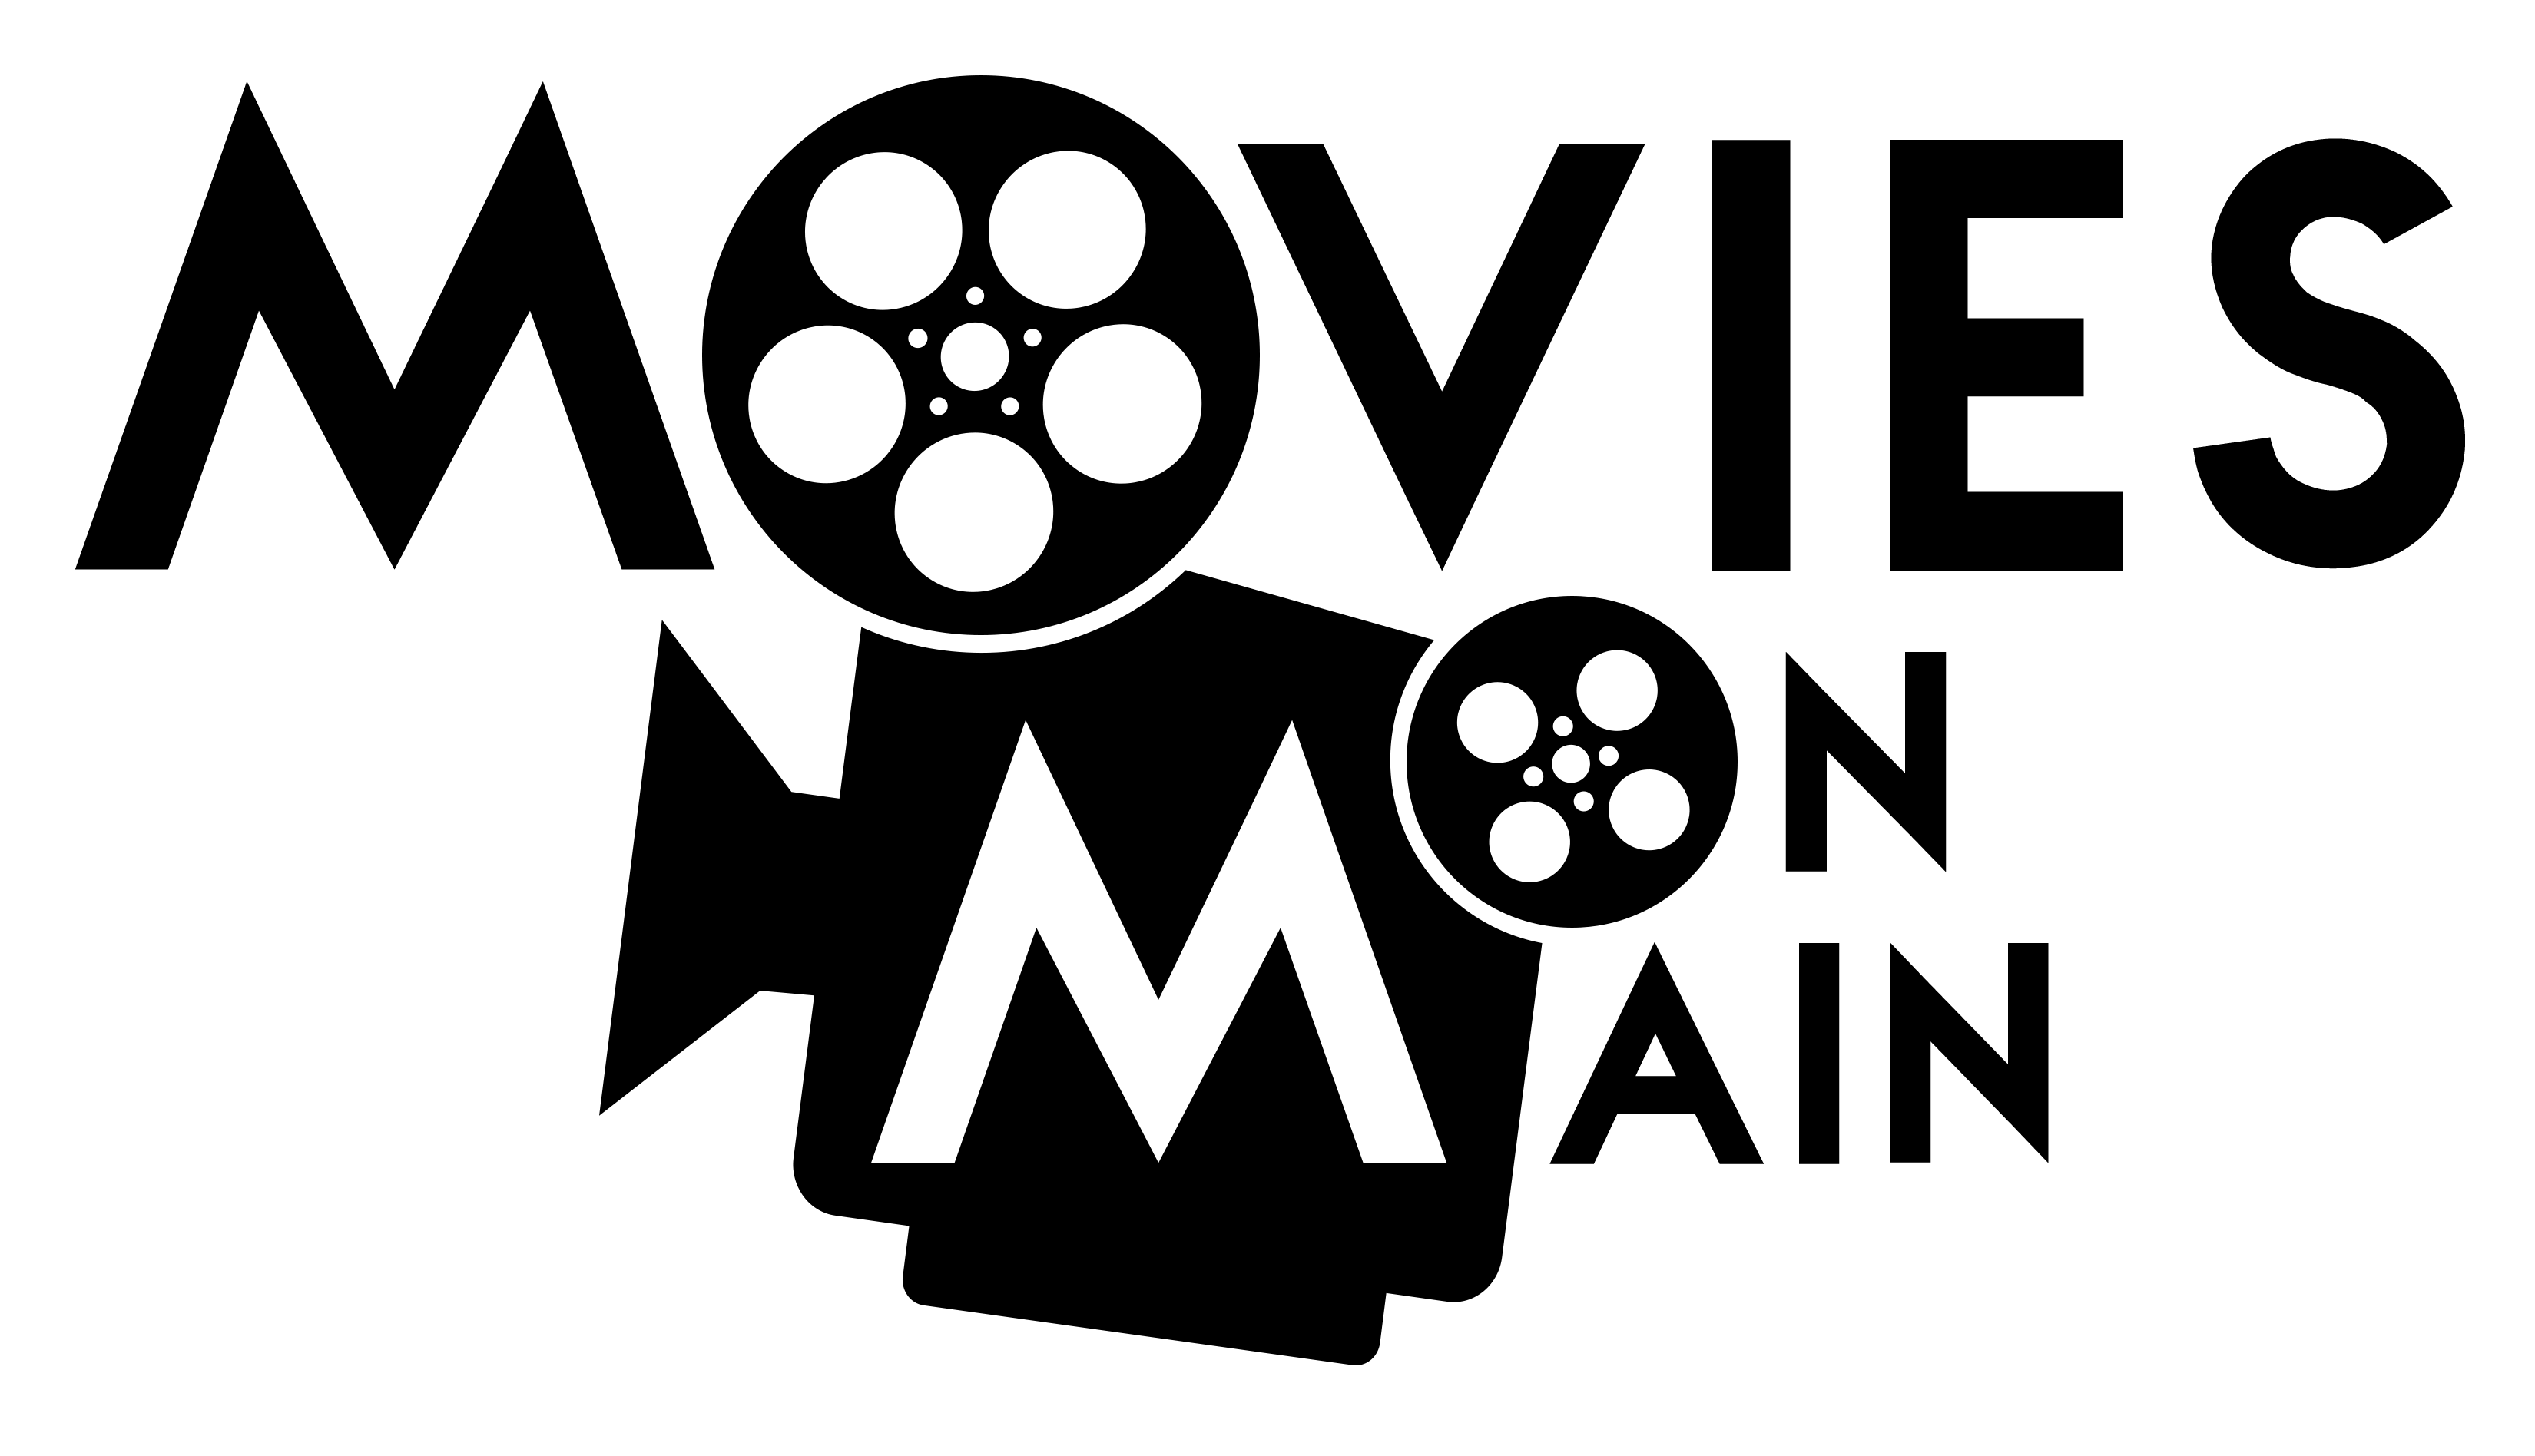 Google Main Logo - Movies on Main Logos – Movies on Main